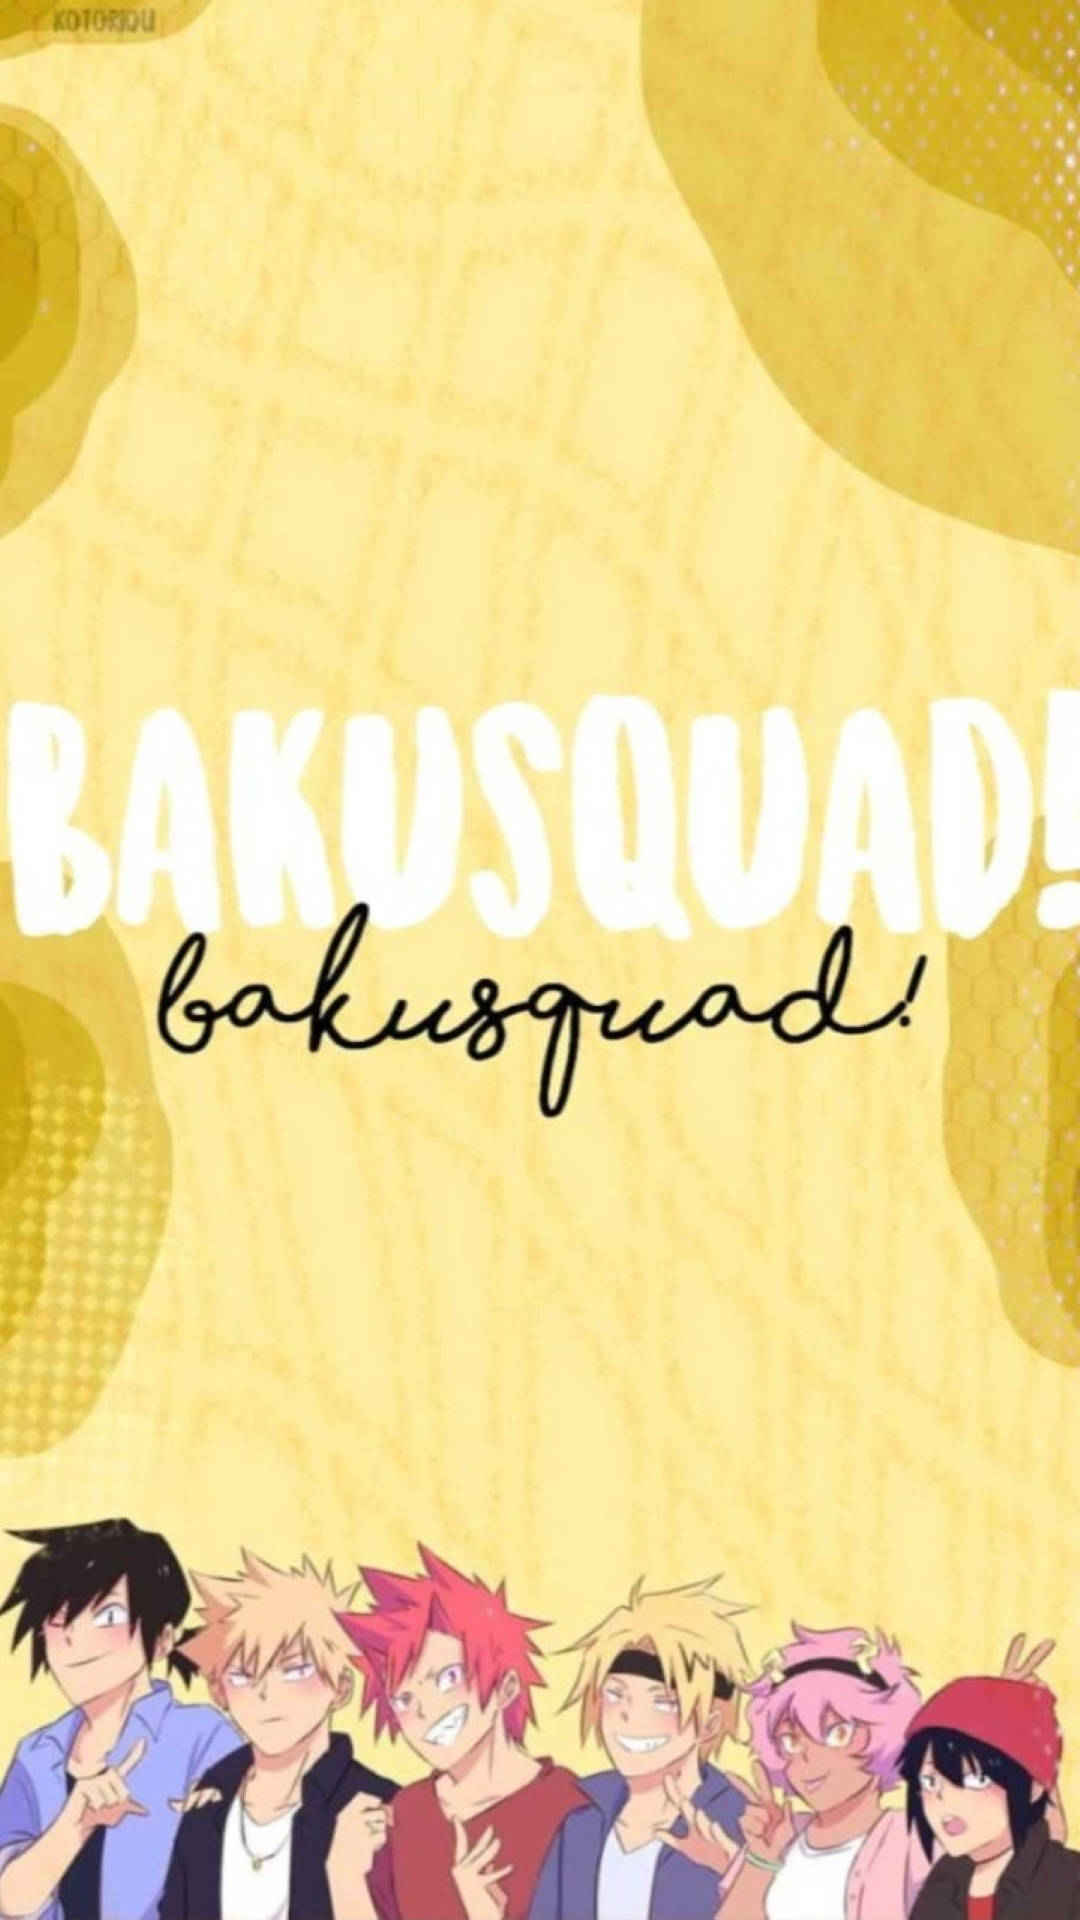 Bakusquad Yellow Art Wallpaper